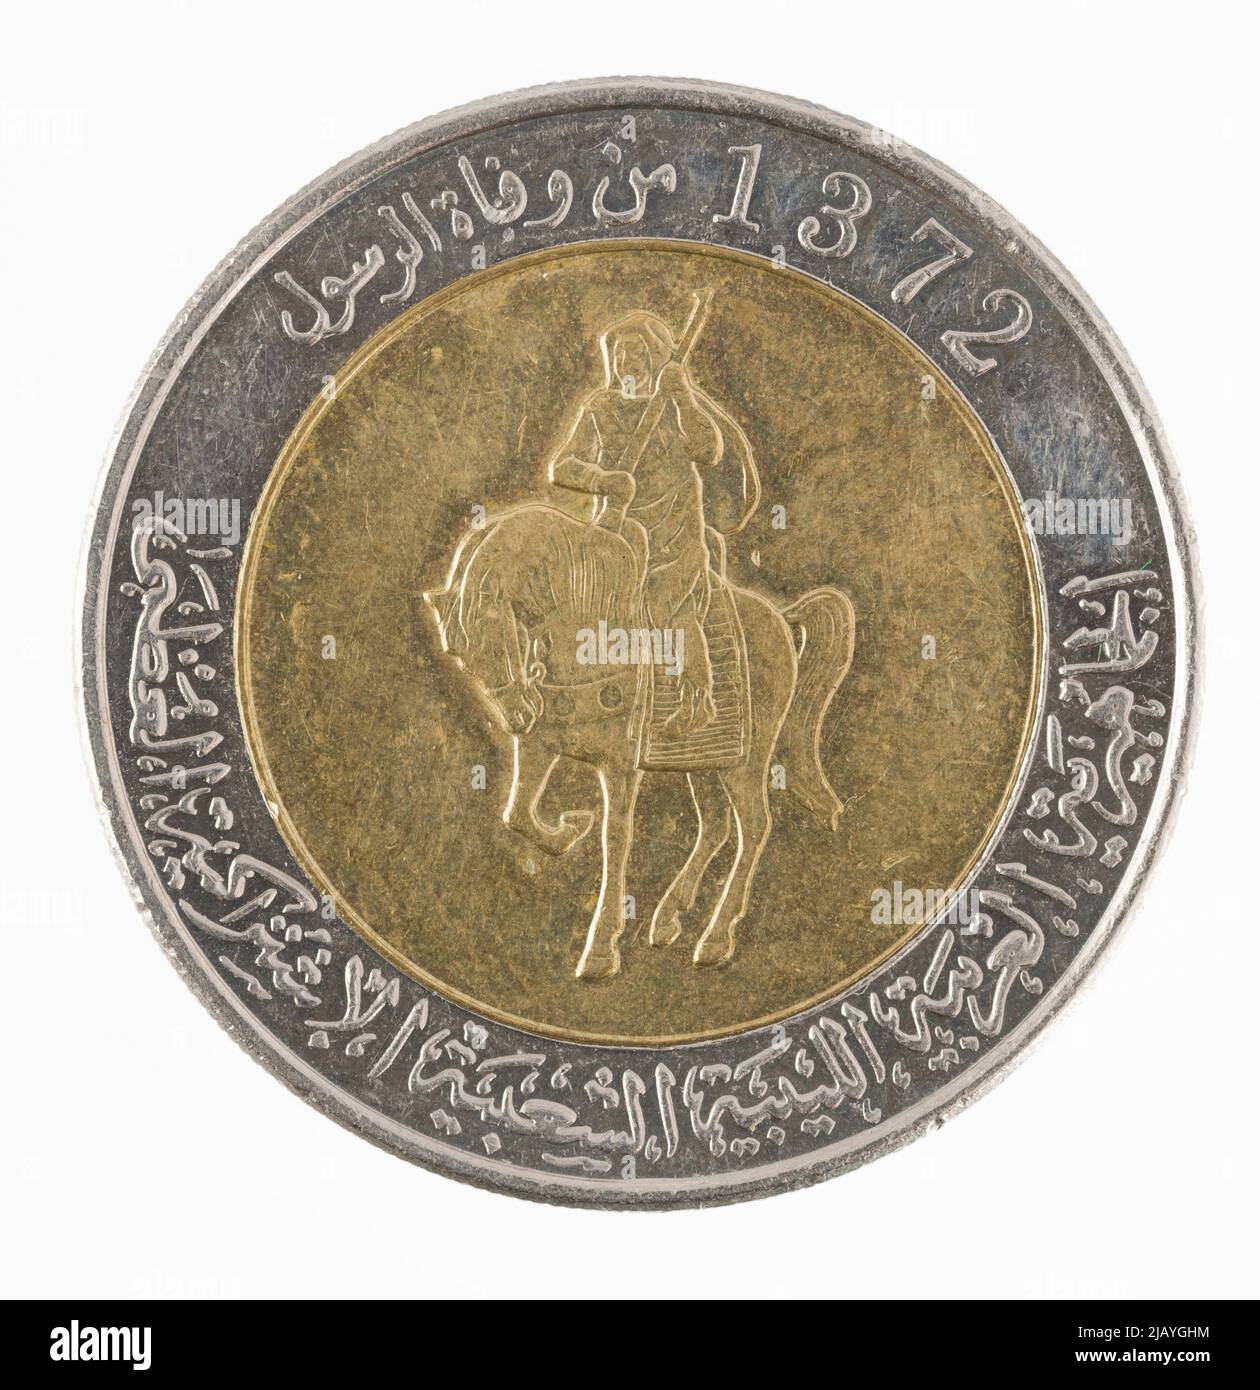 LIBIA, 1/2 DINARA, 2004 (AH 1372) Central Bank of Libya Stock Photo